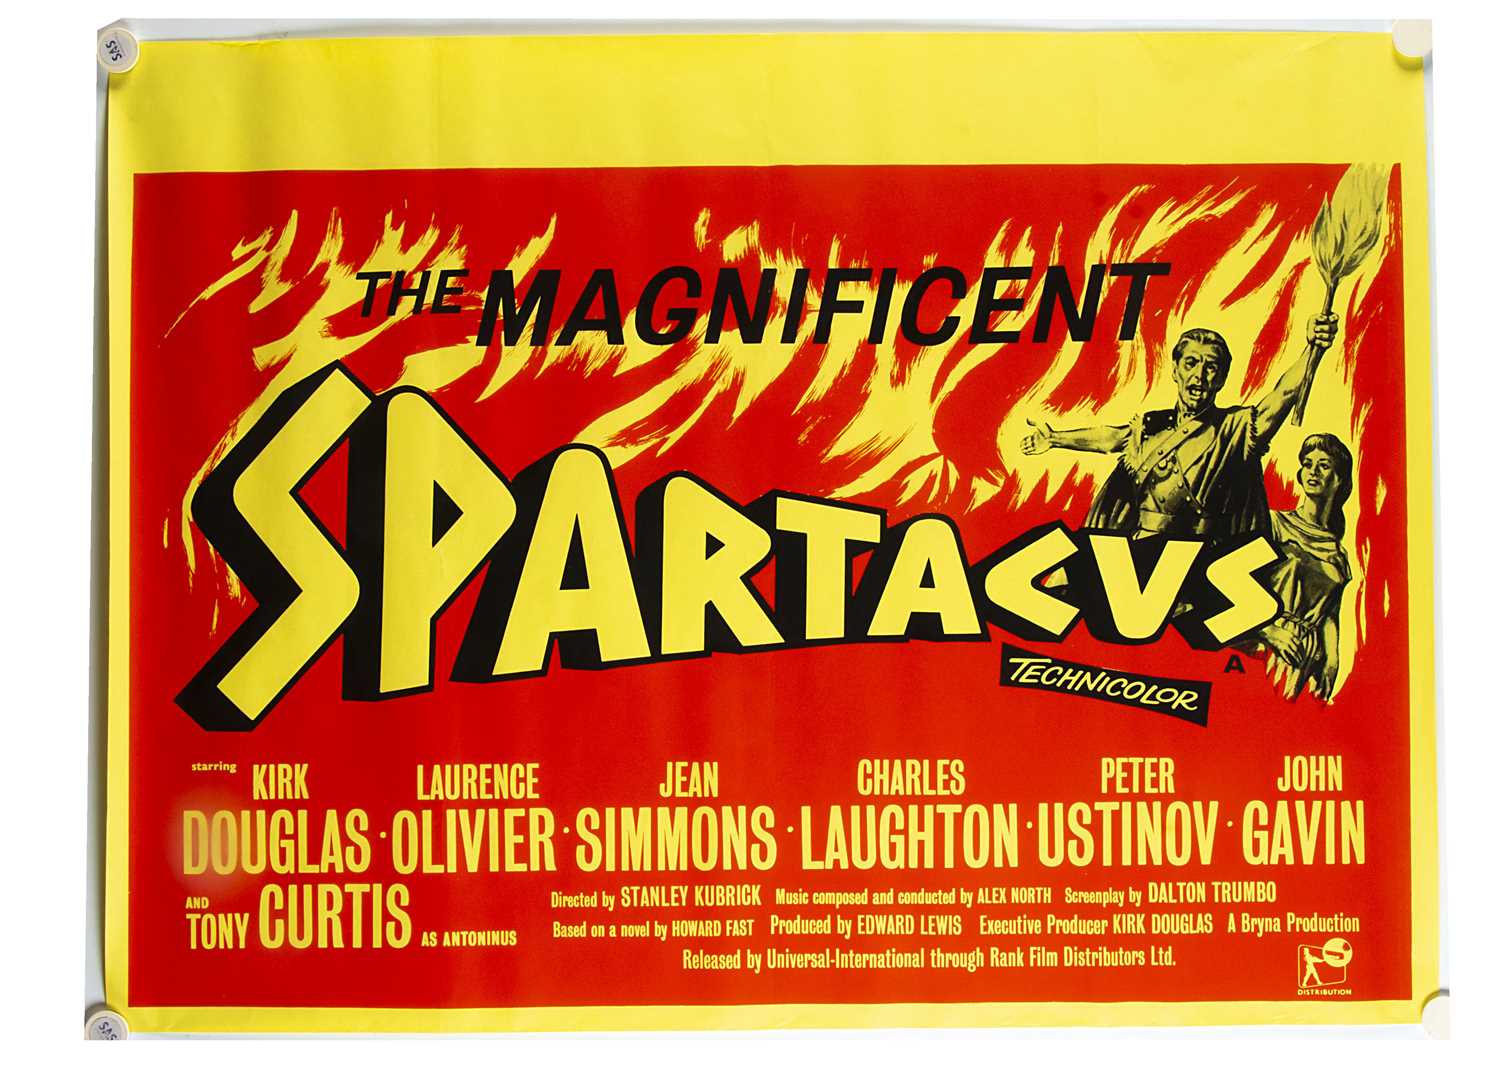 Lot 411 - Spartacus (rr1960) Quad Poster